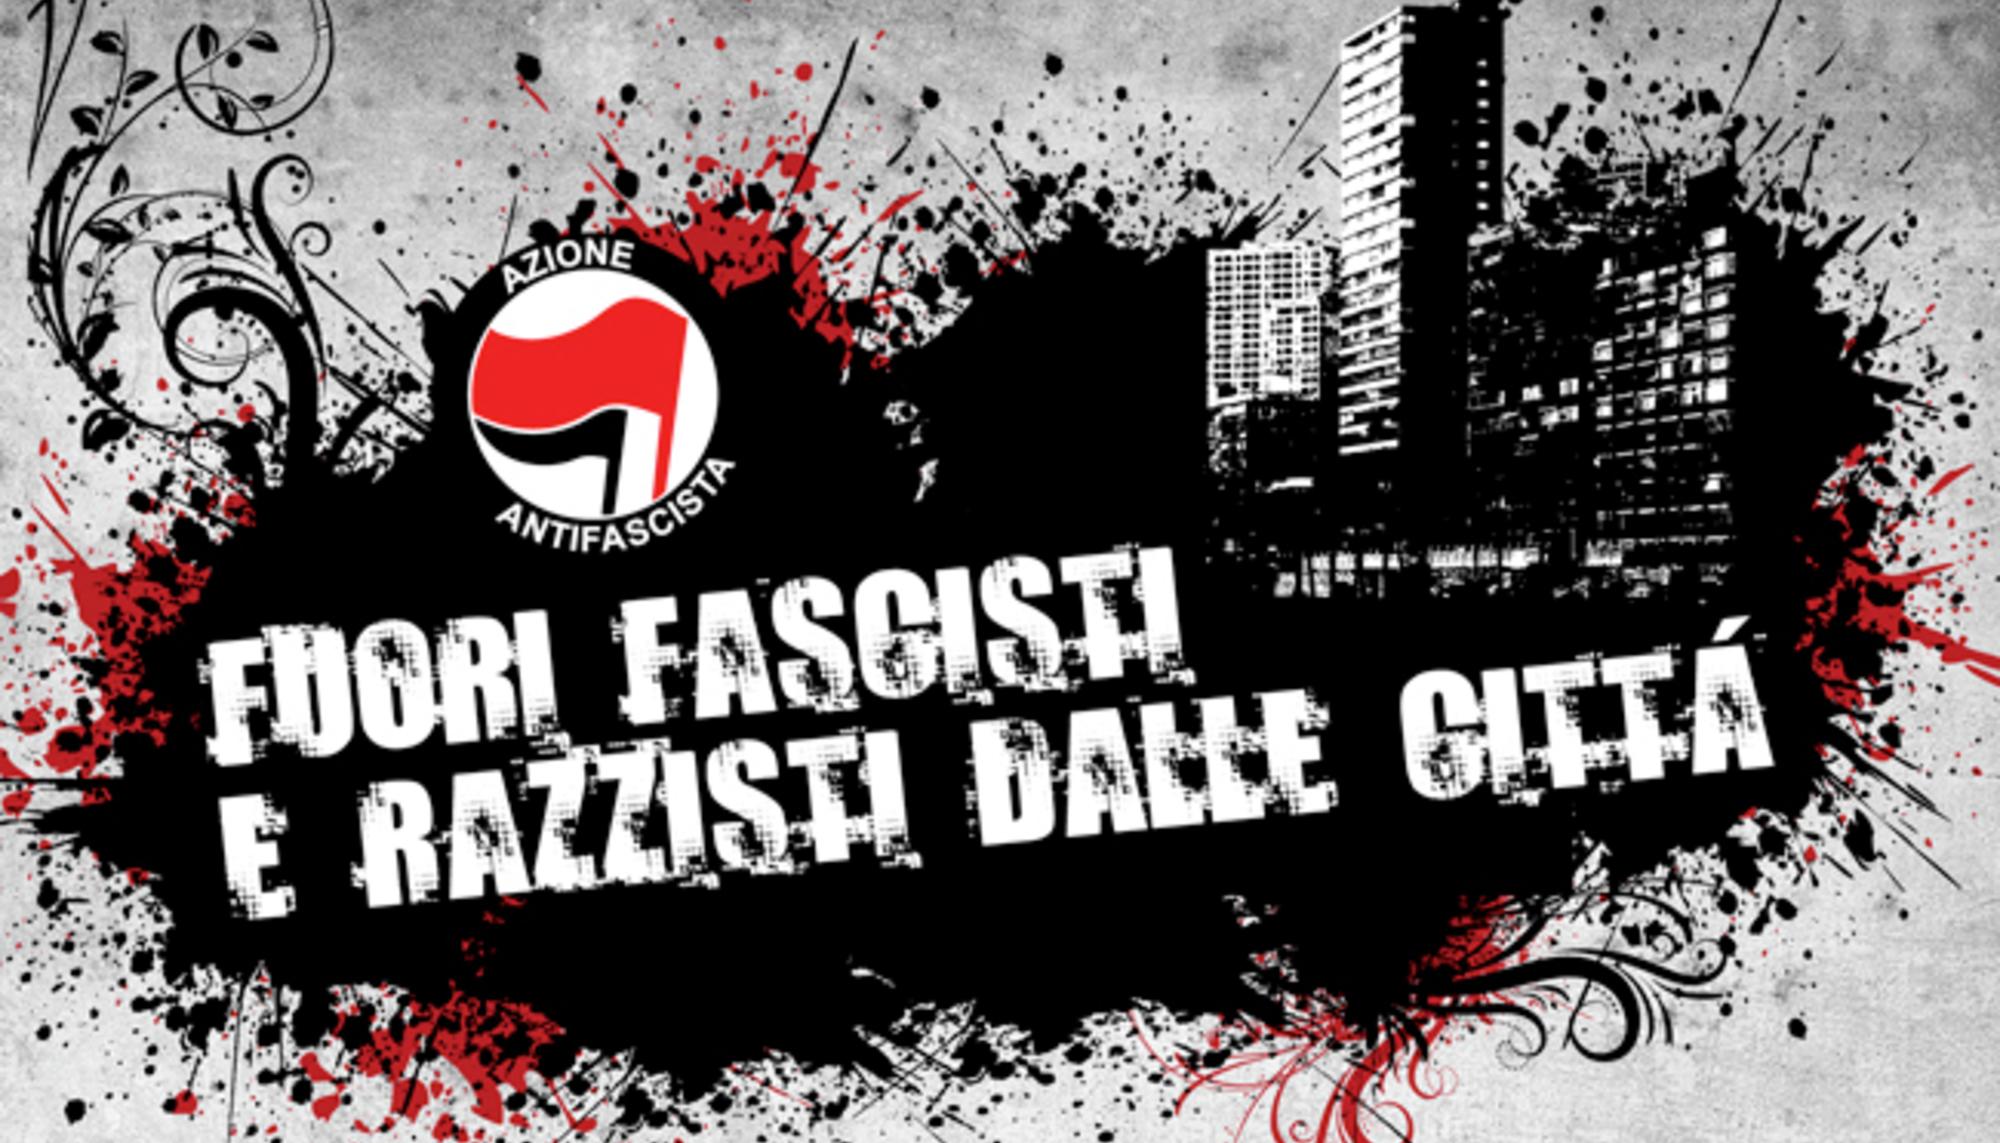 Antifascismo en Italia